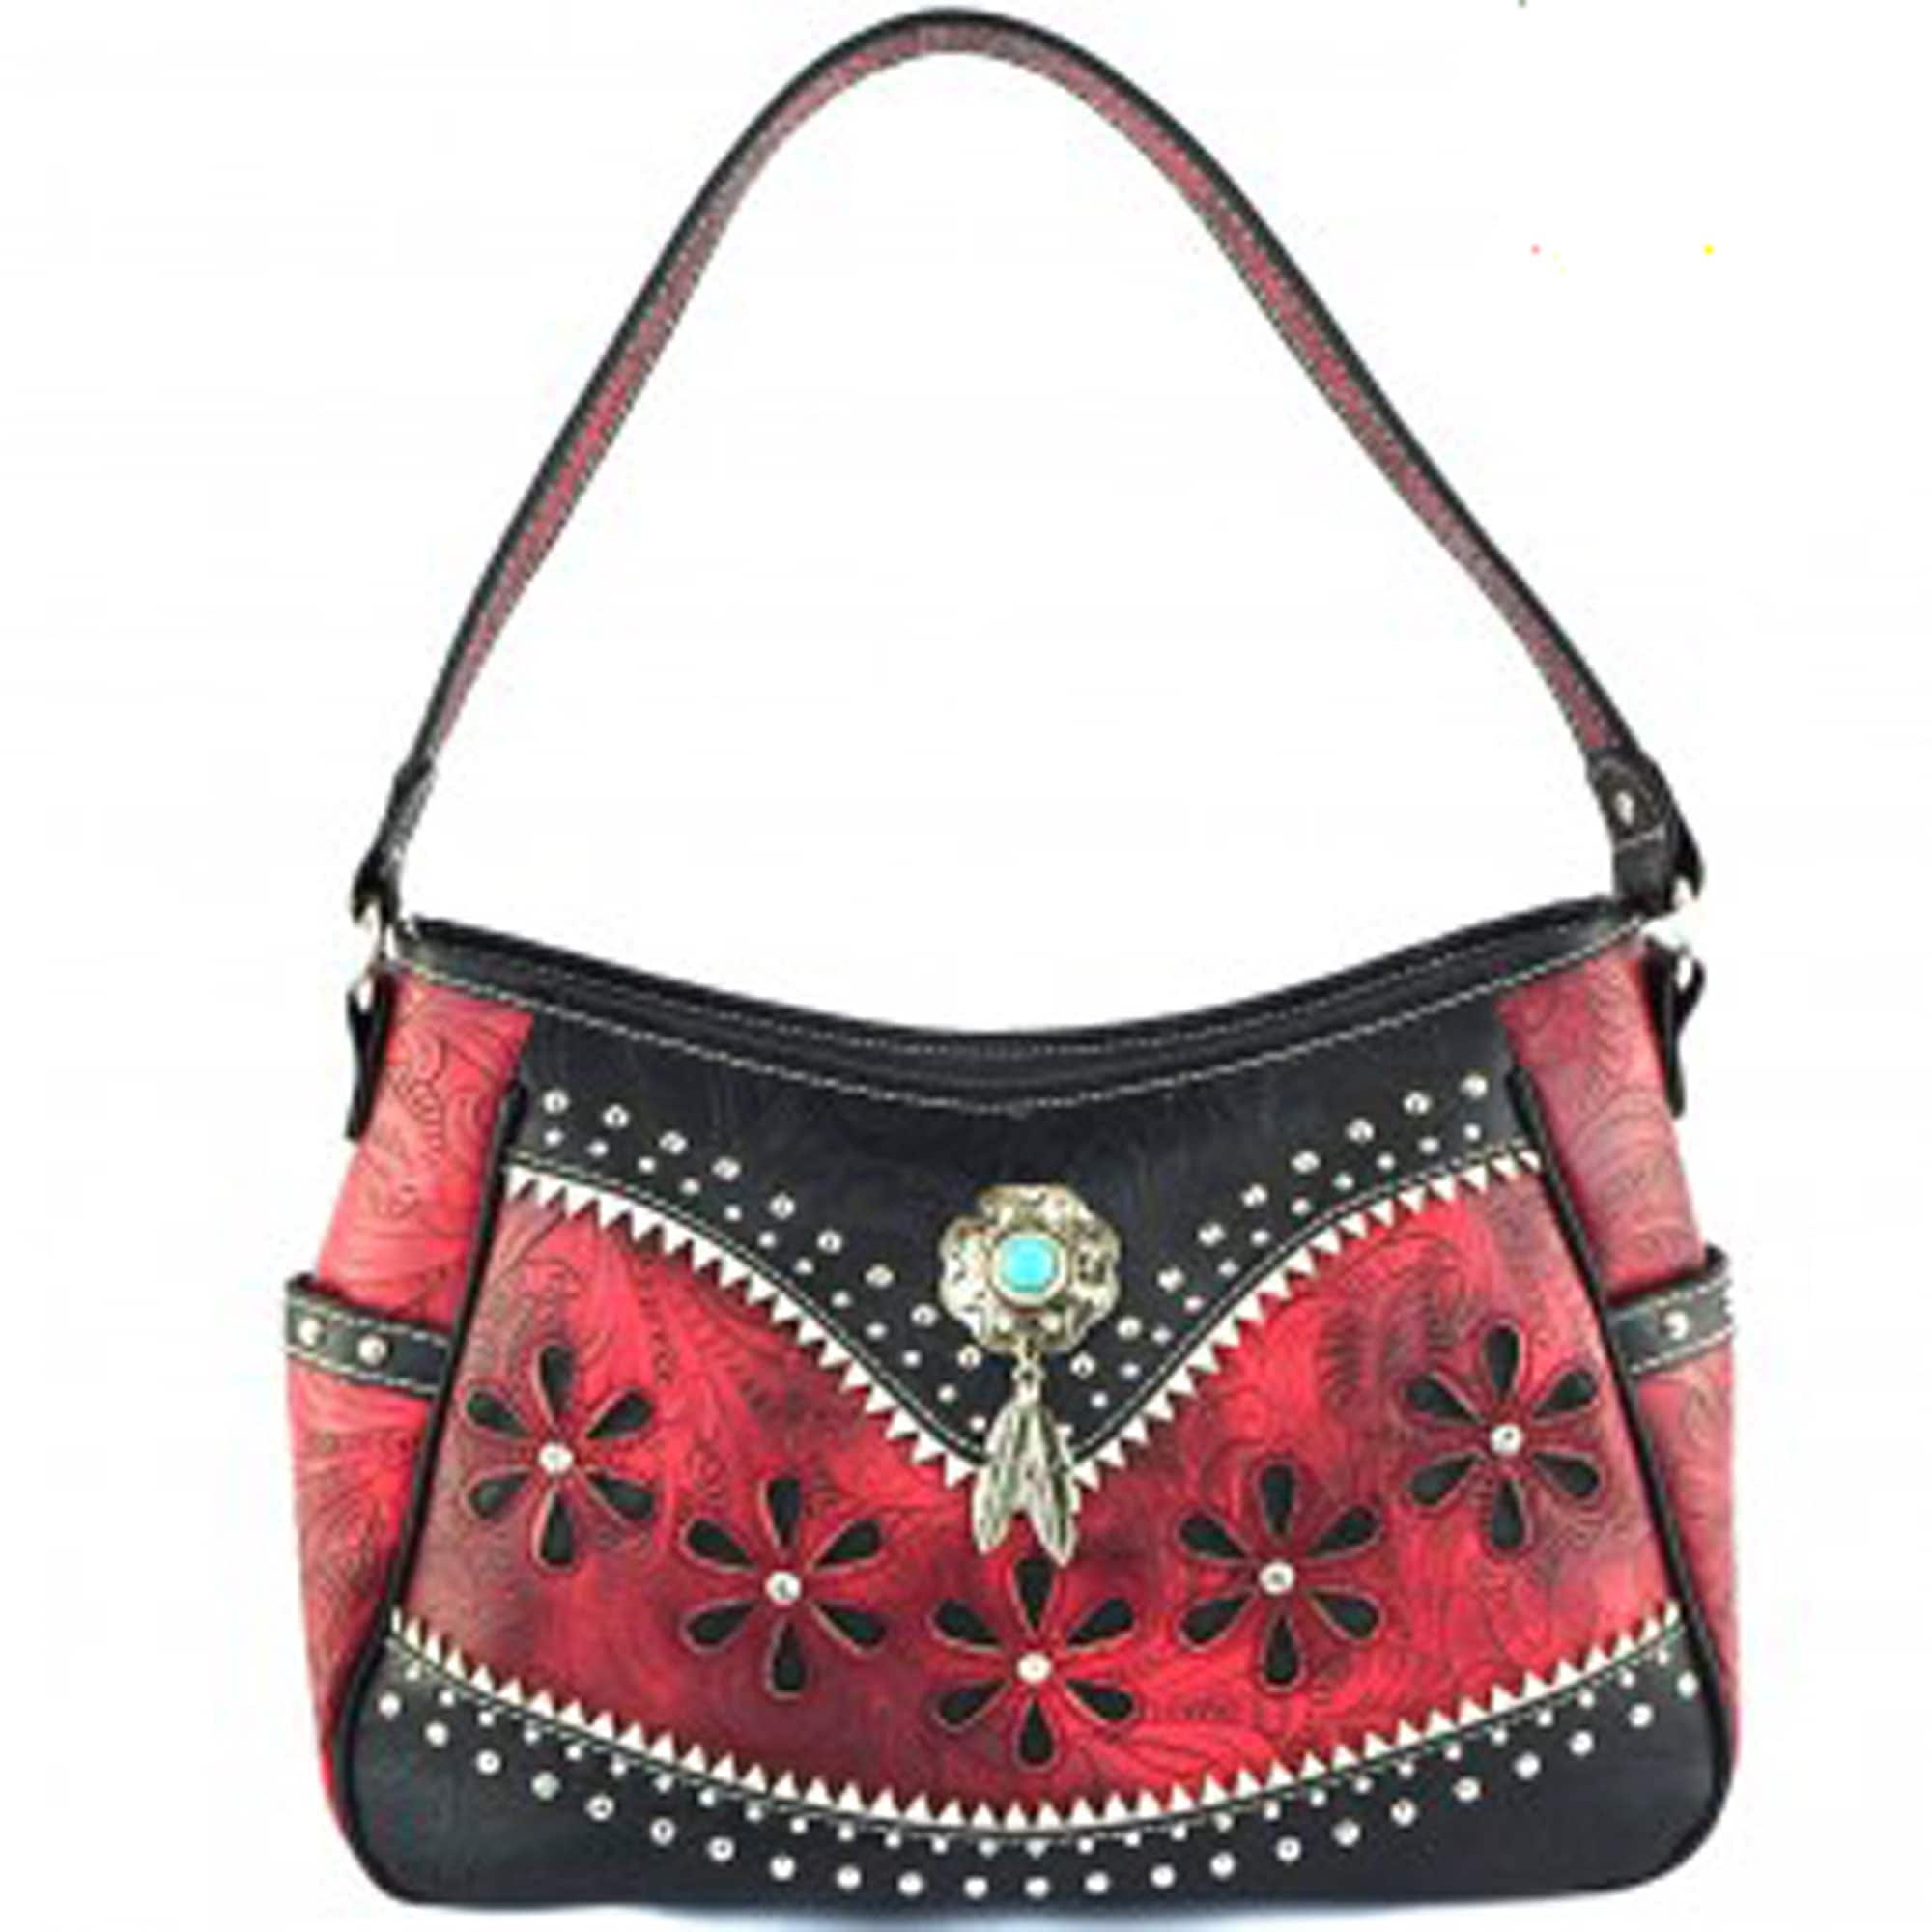 New Women's Silverake Western Style Purse Handbag Red | eBay